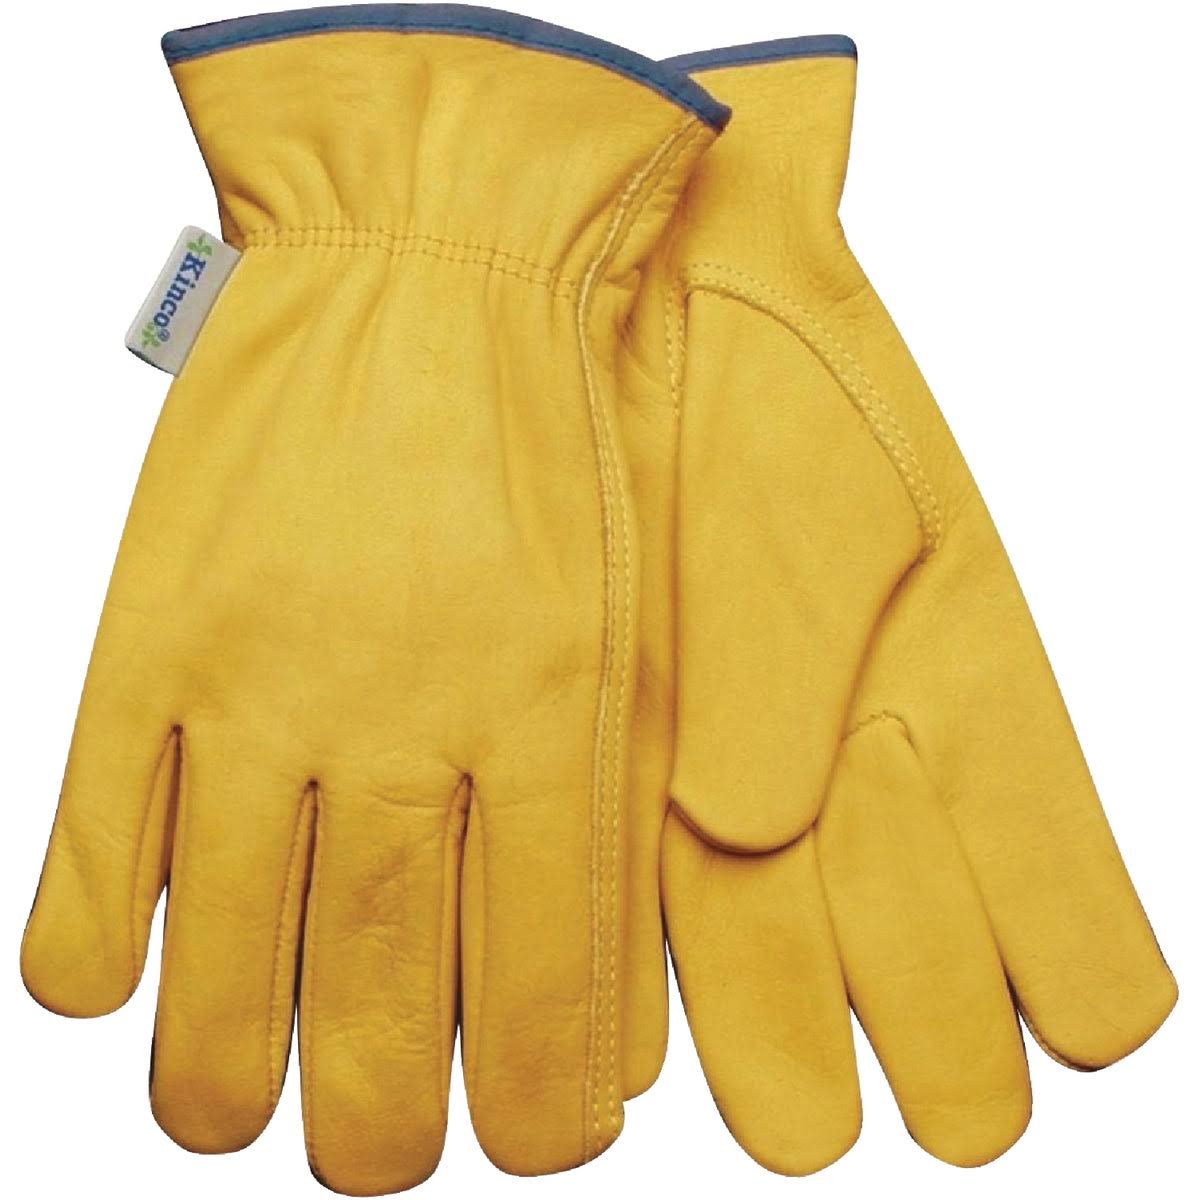 Kinco Unlined Grain Cowhide Leather Women's Glove - Medium